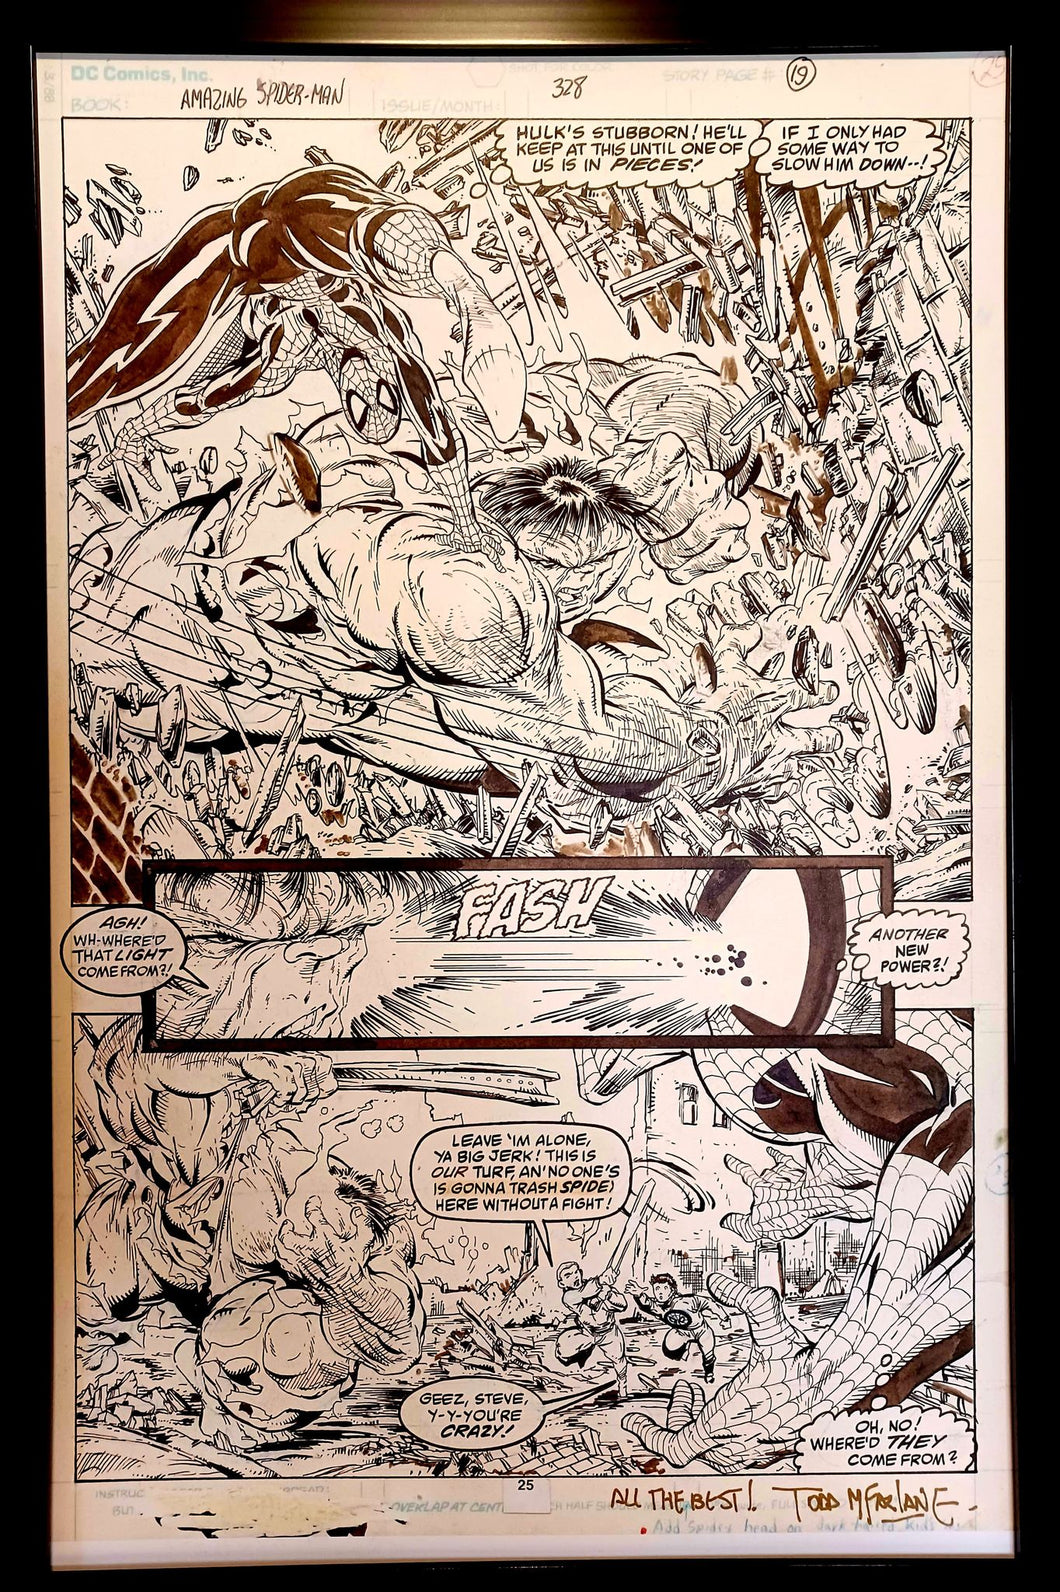 Amazing Spider-Man #328 pg. 19 by Todd McFarlane 11x17 FRAMED Original Art Print Comic Poster